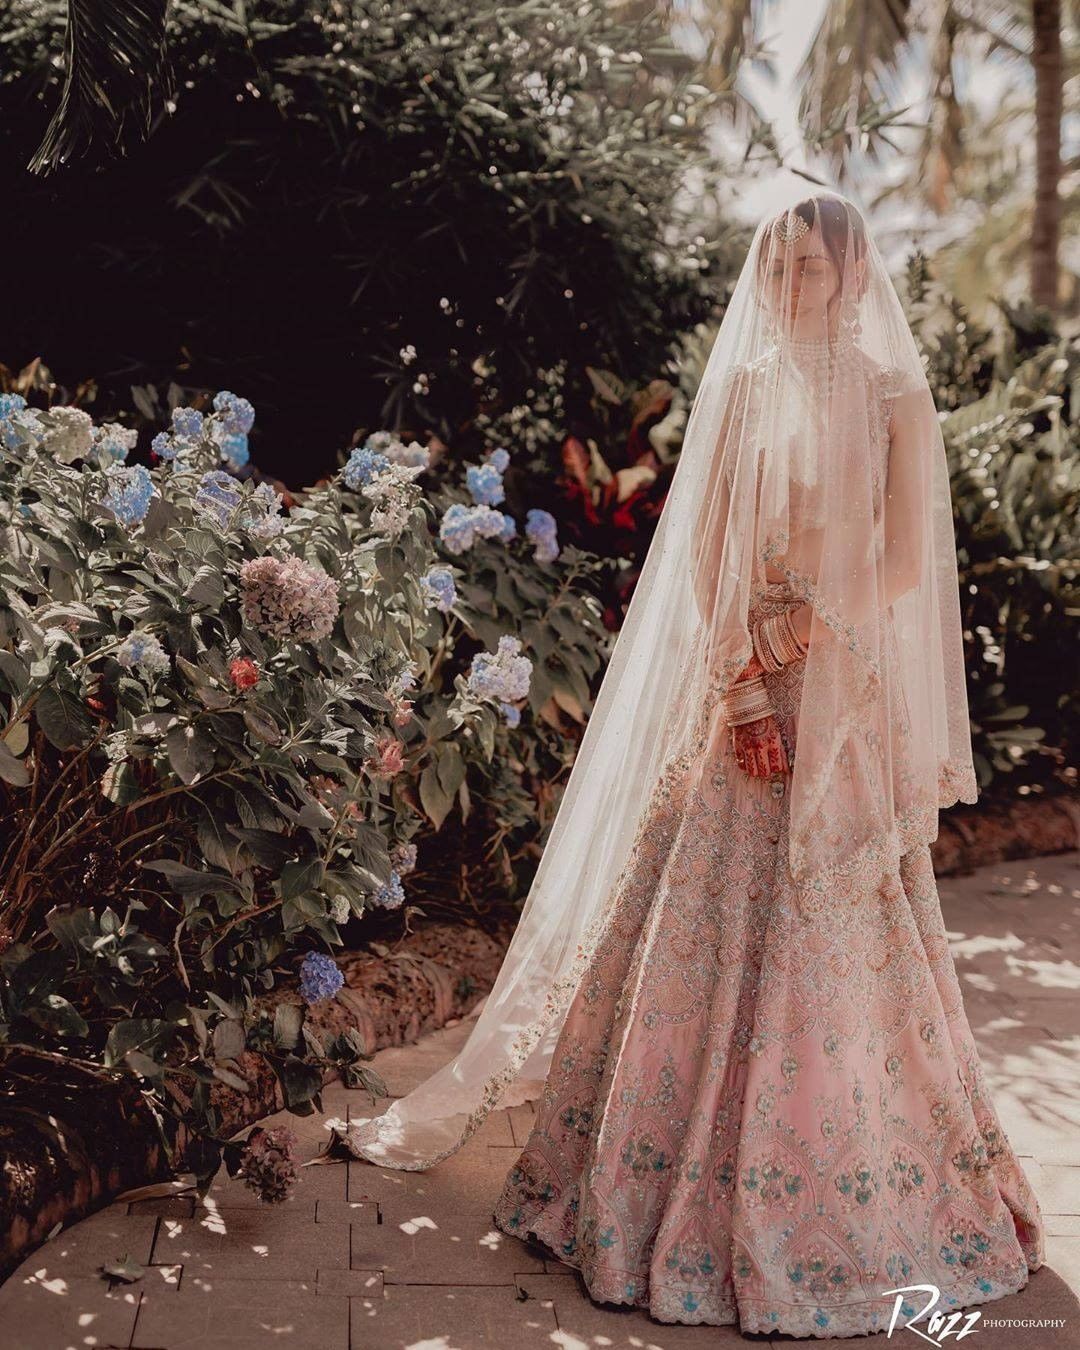 #MustHave: Intense Bridal Veil Shots For Your Wedding Album | WedMeGood